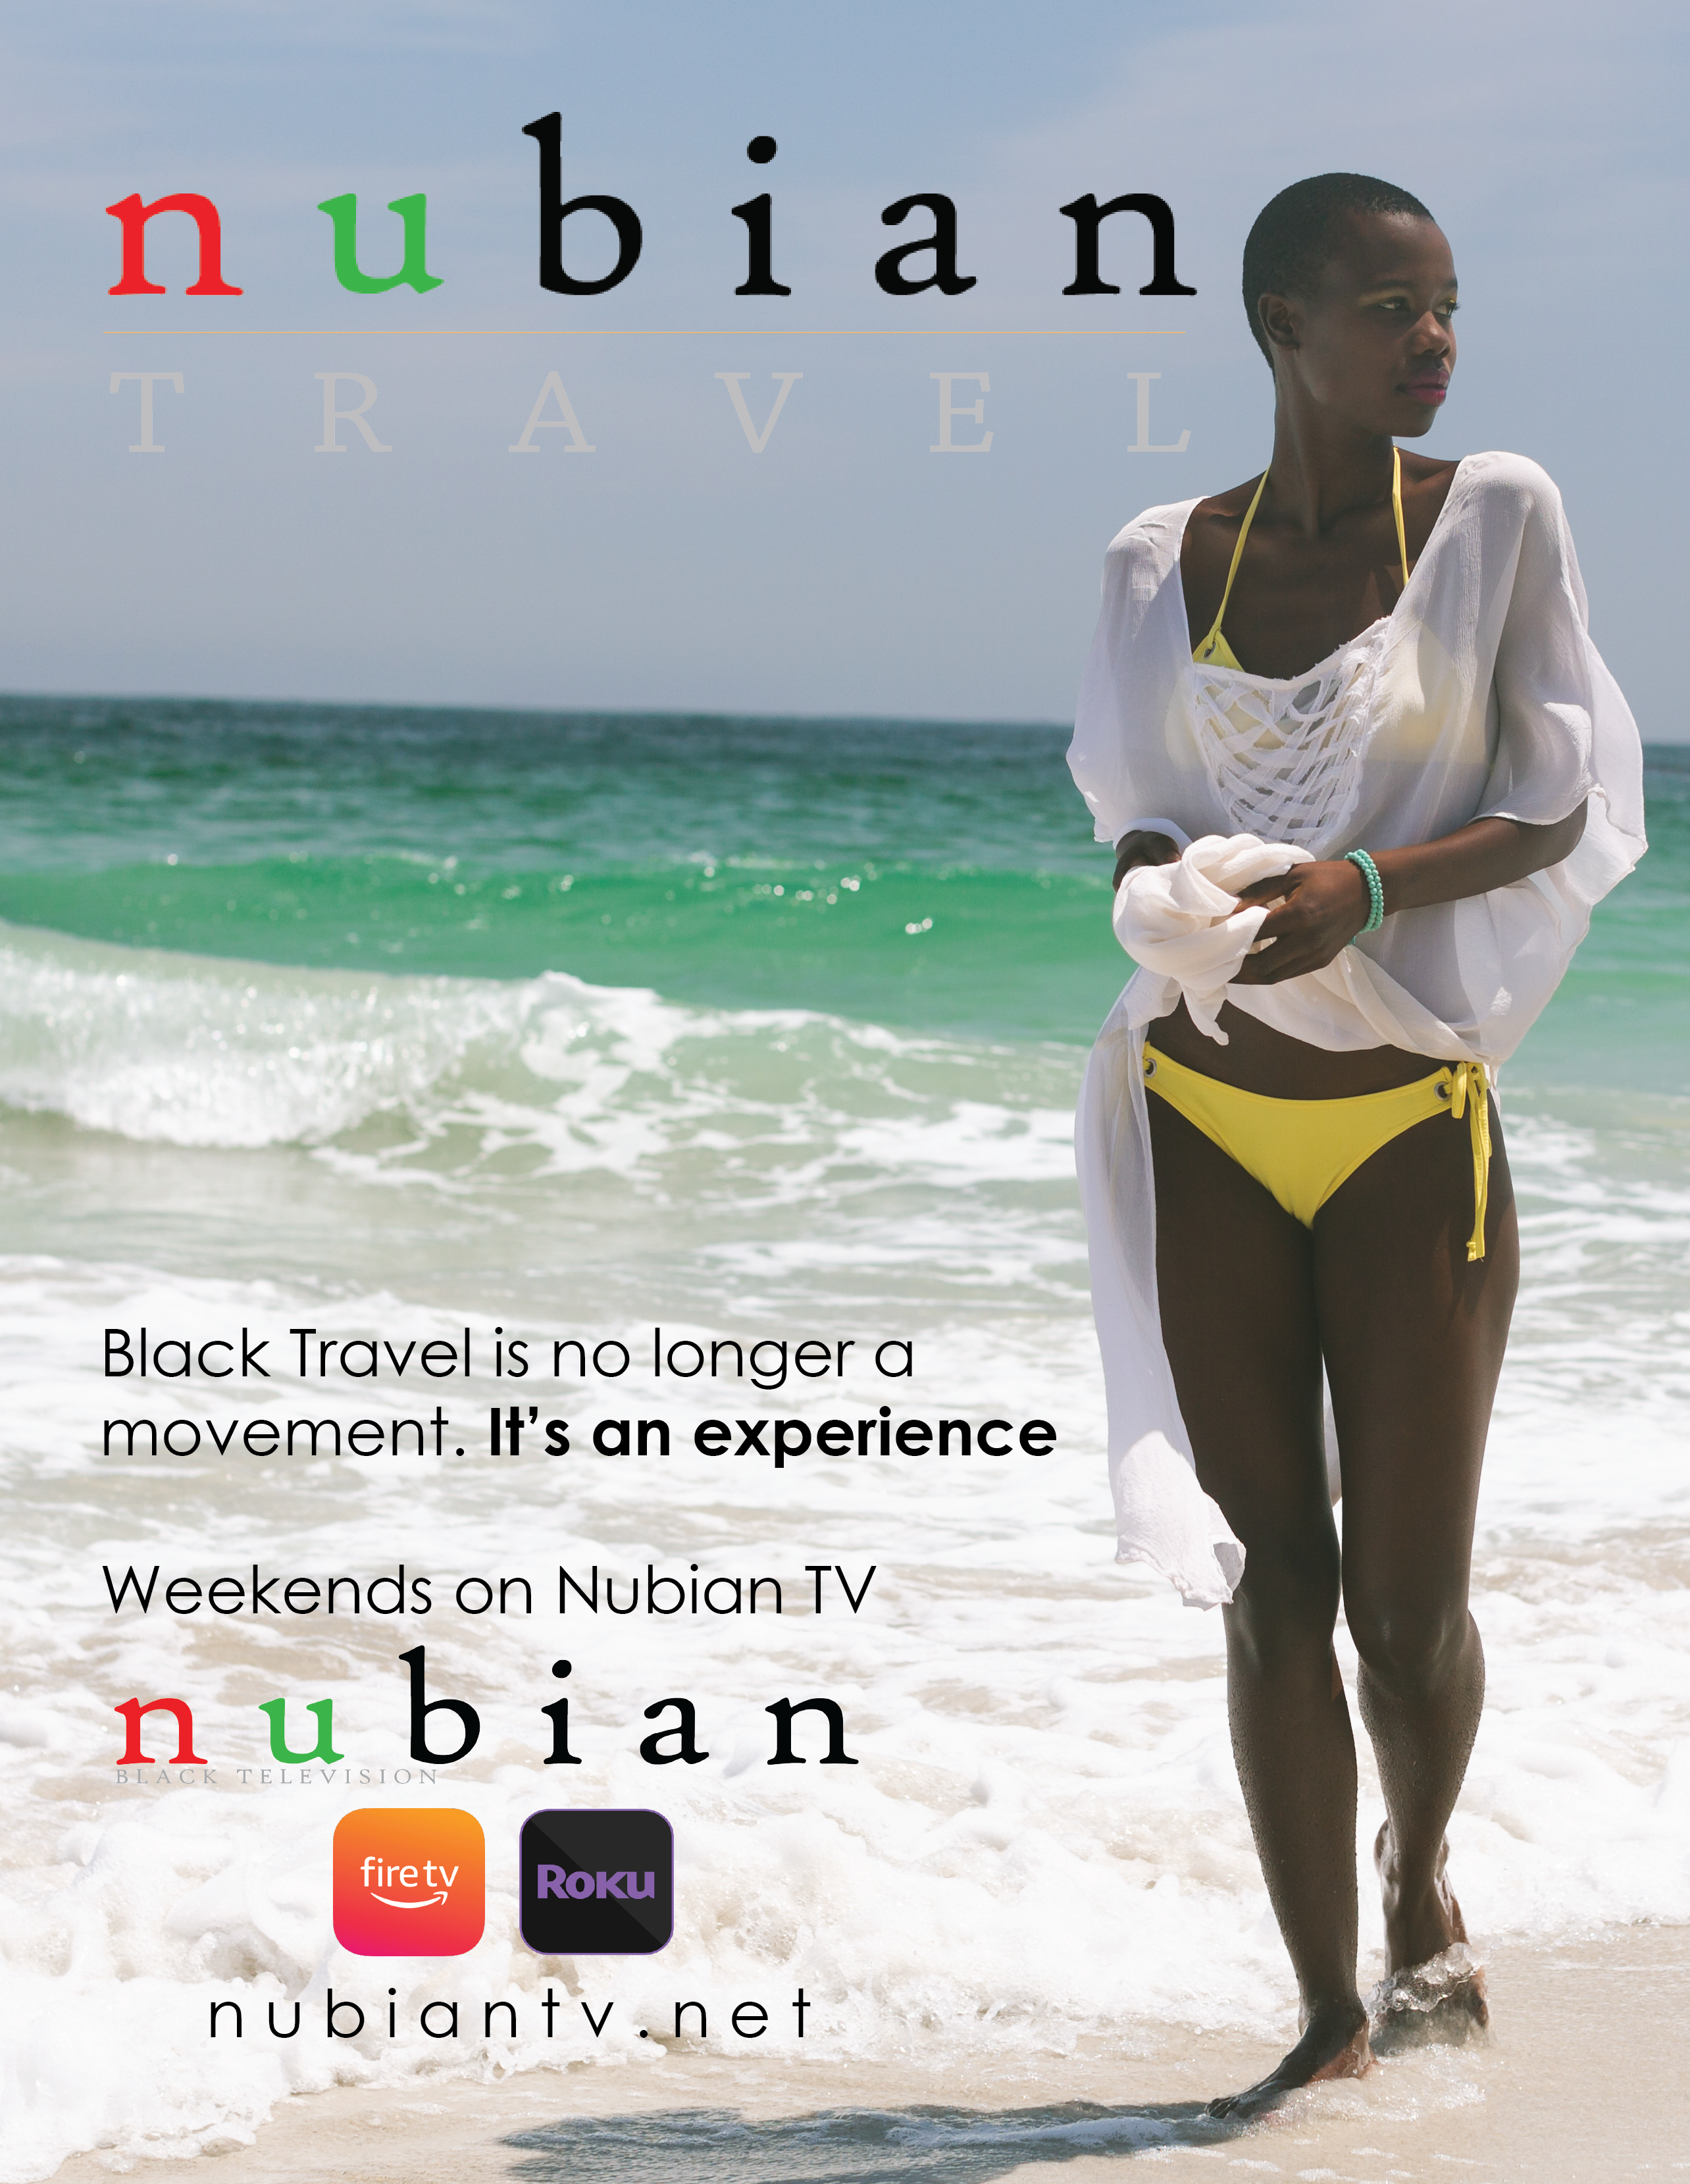 Nubian Destinations – The Black Travel Experience